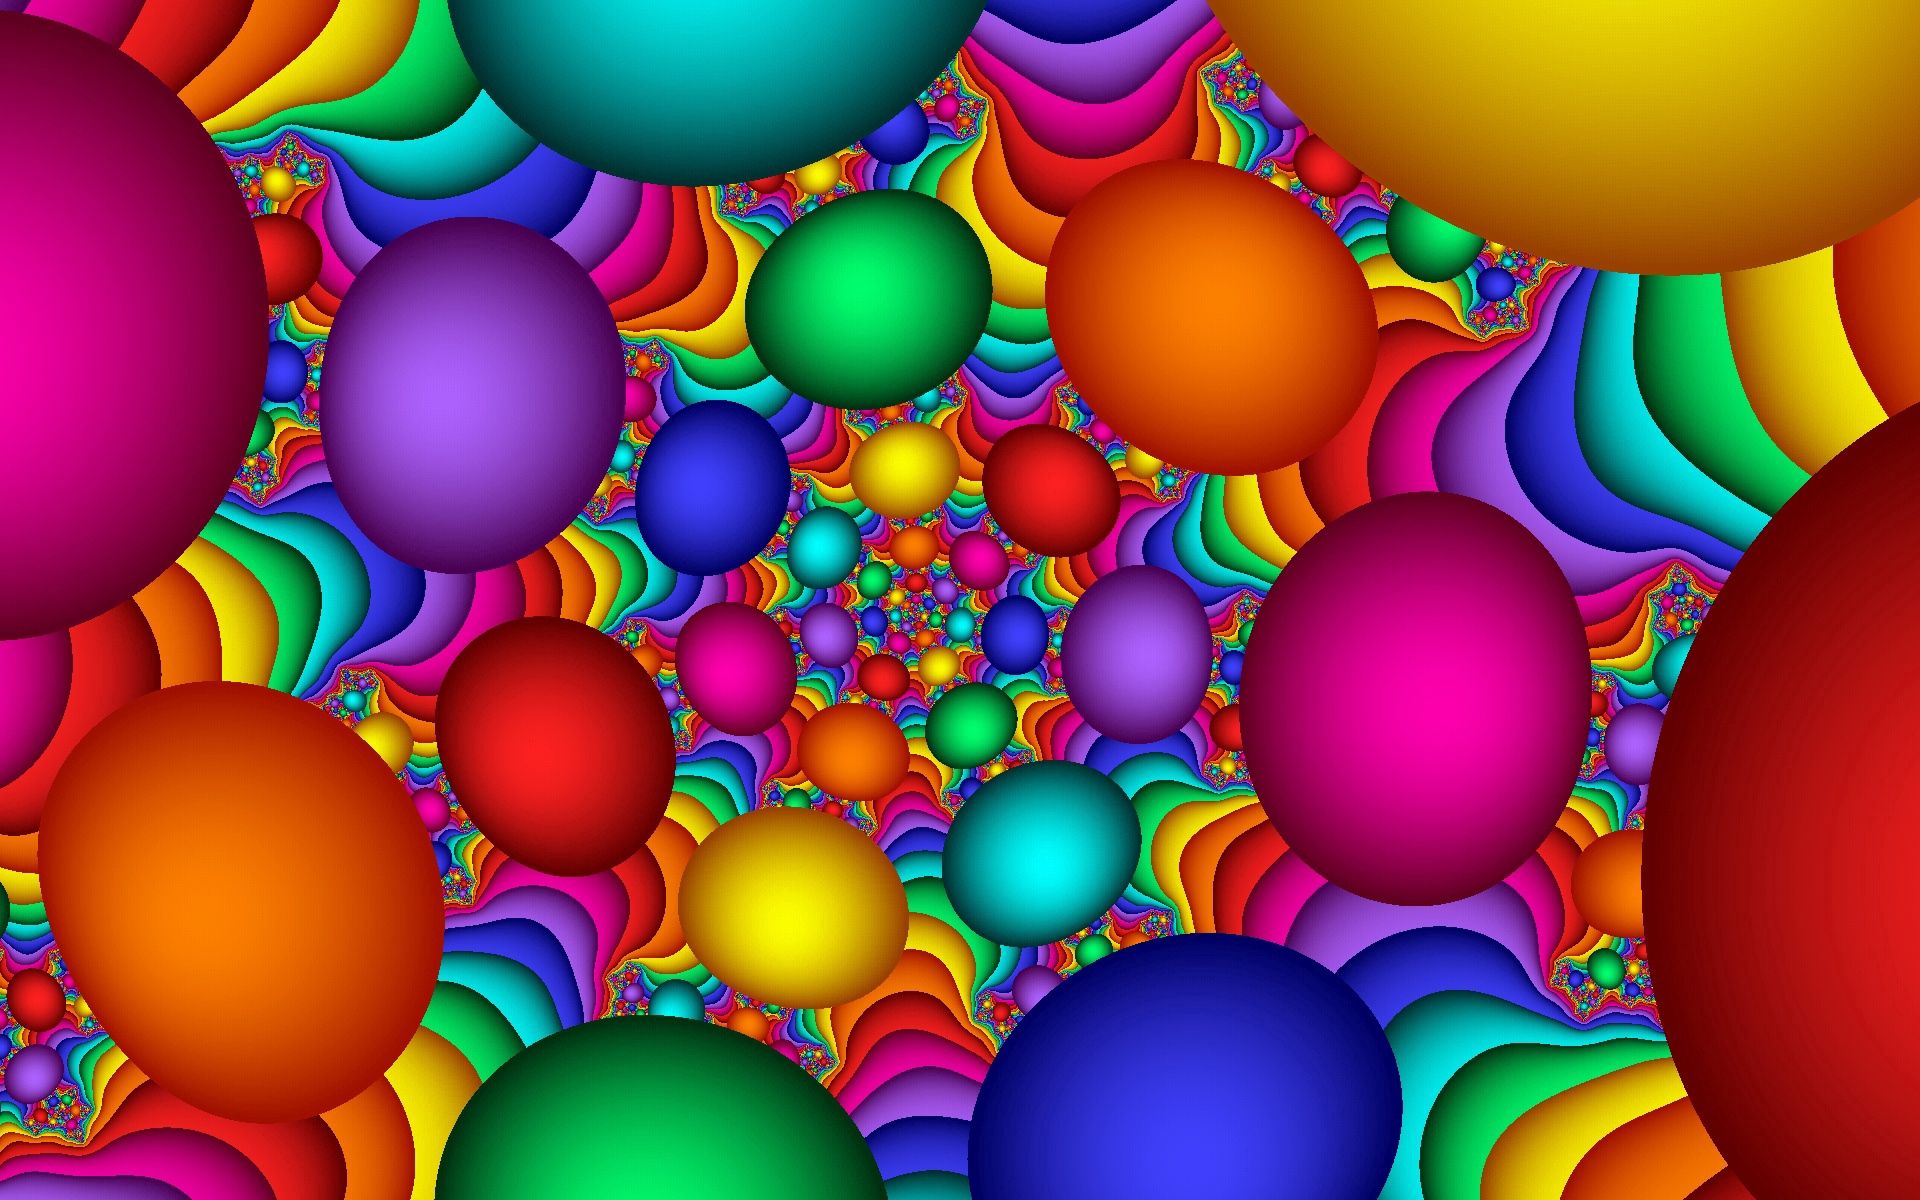 Lock Screen PC Wallpaper motley, multicolored, balls, abstract, background, bright